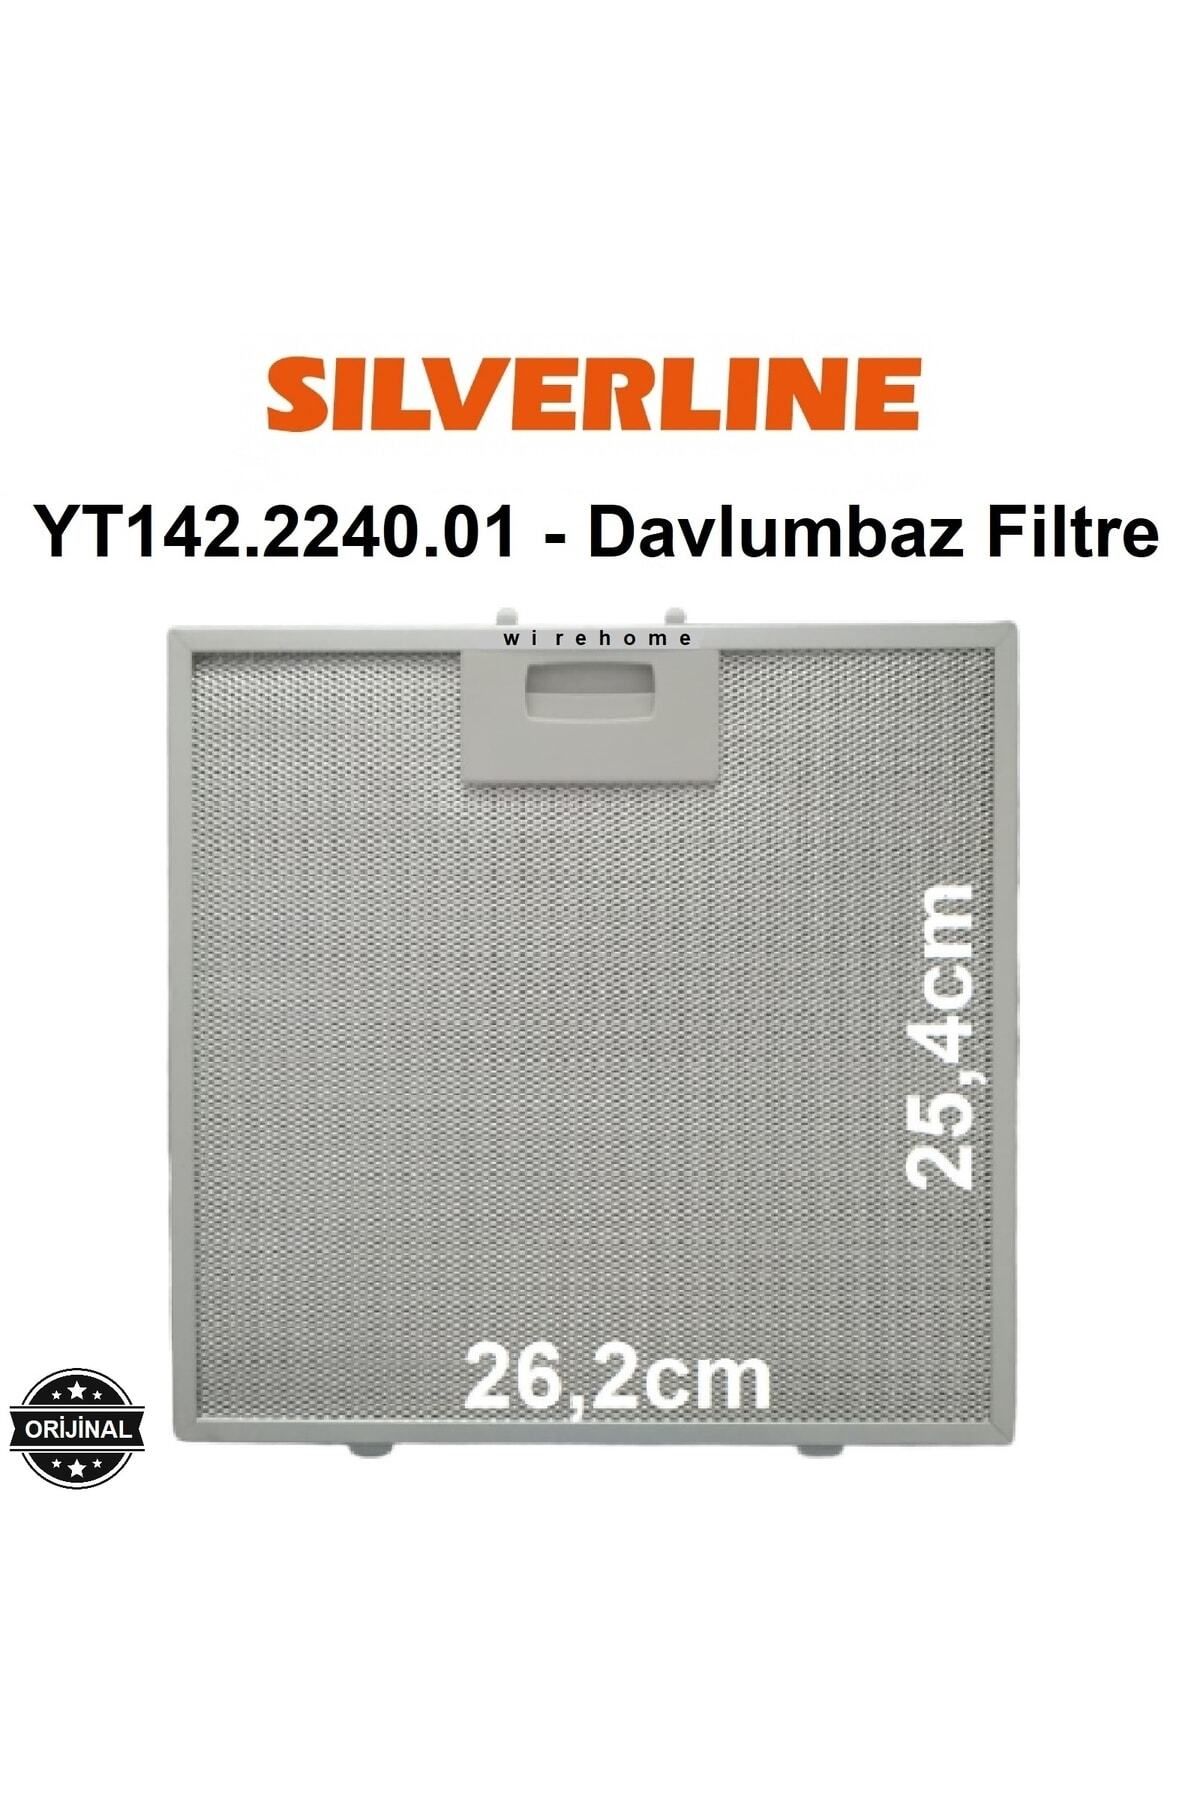 Silverline 2240 Conic Davlumbaz Aspiratör Filtre-yt142.2240.01